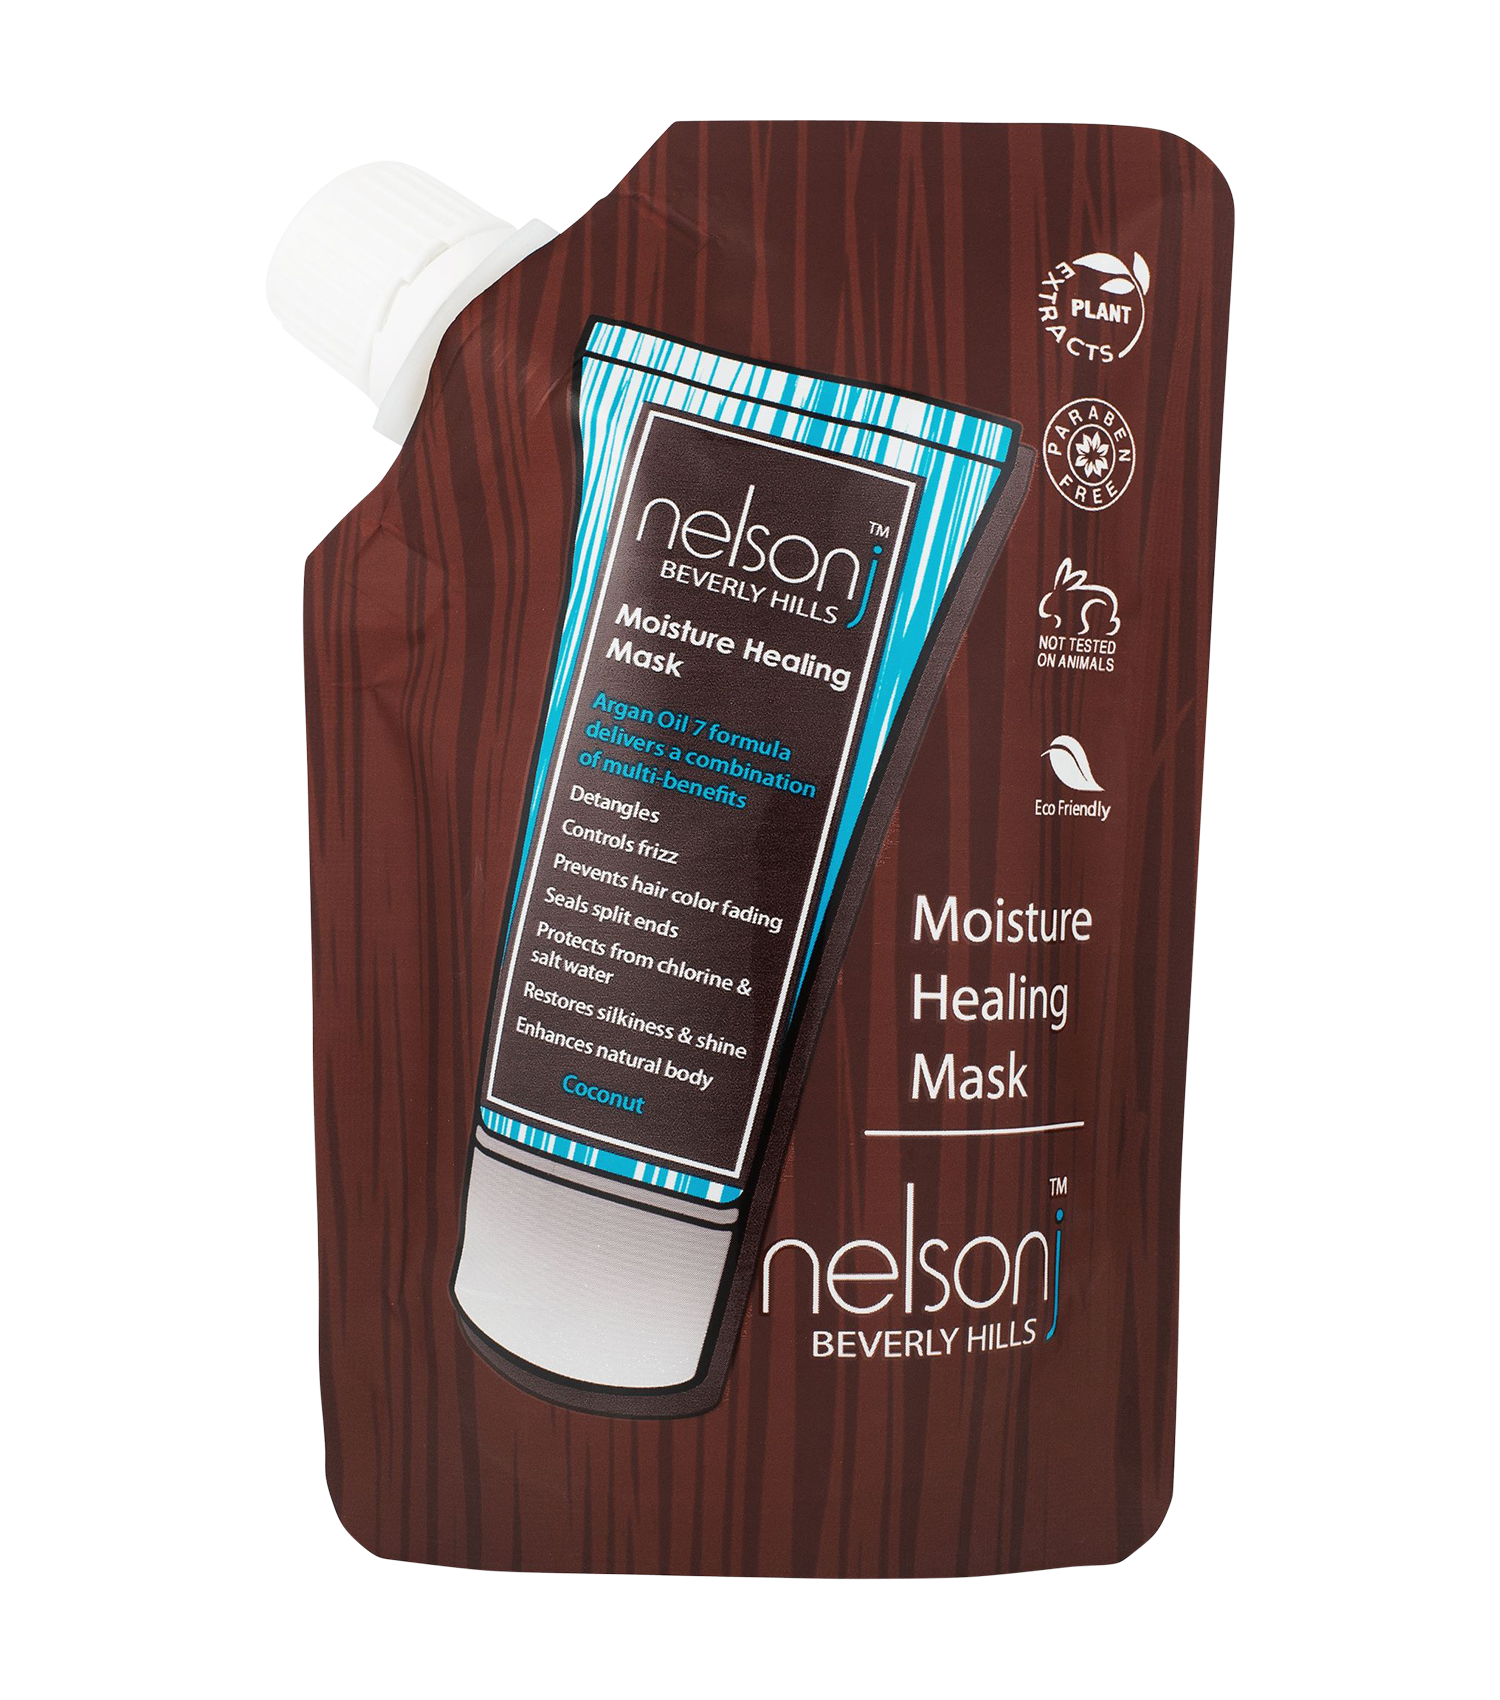 Nelson J Moisture Healing Mask (Argan Oil Formula) Moisture Healing Mask - 1oz - Deluxe Travel Size 1